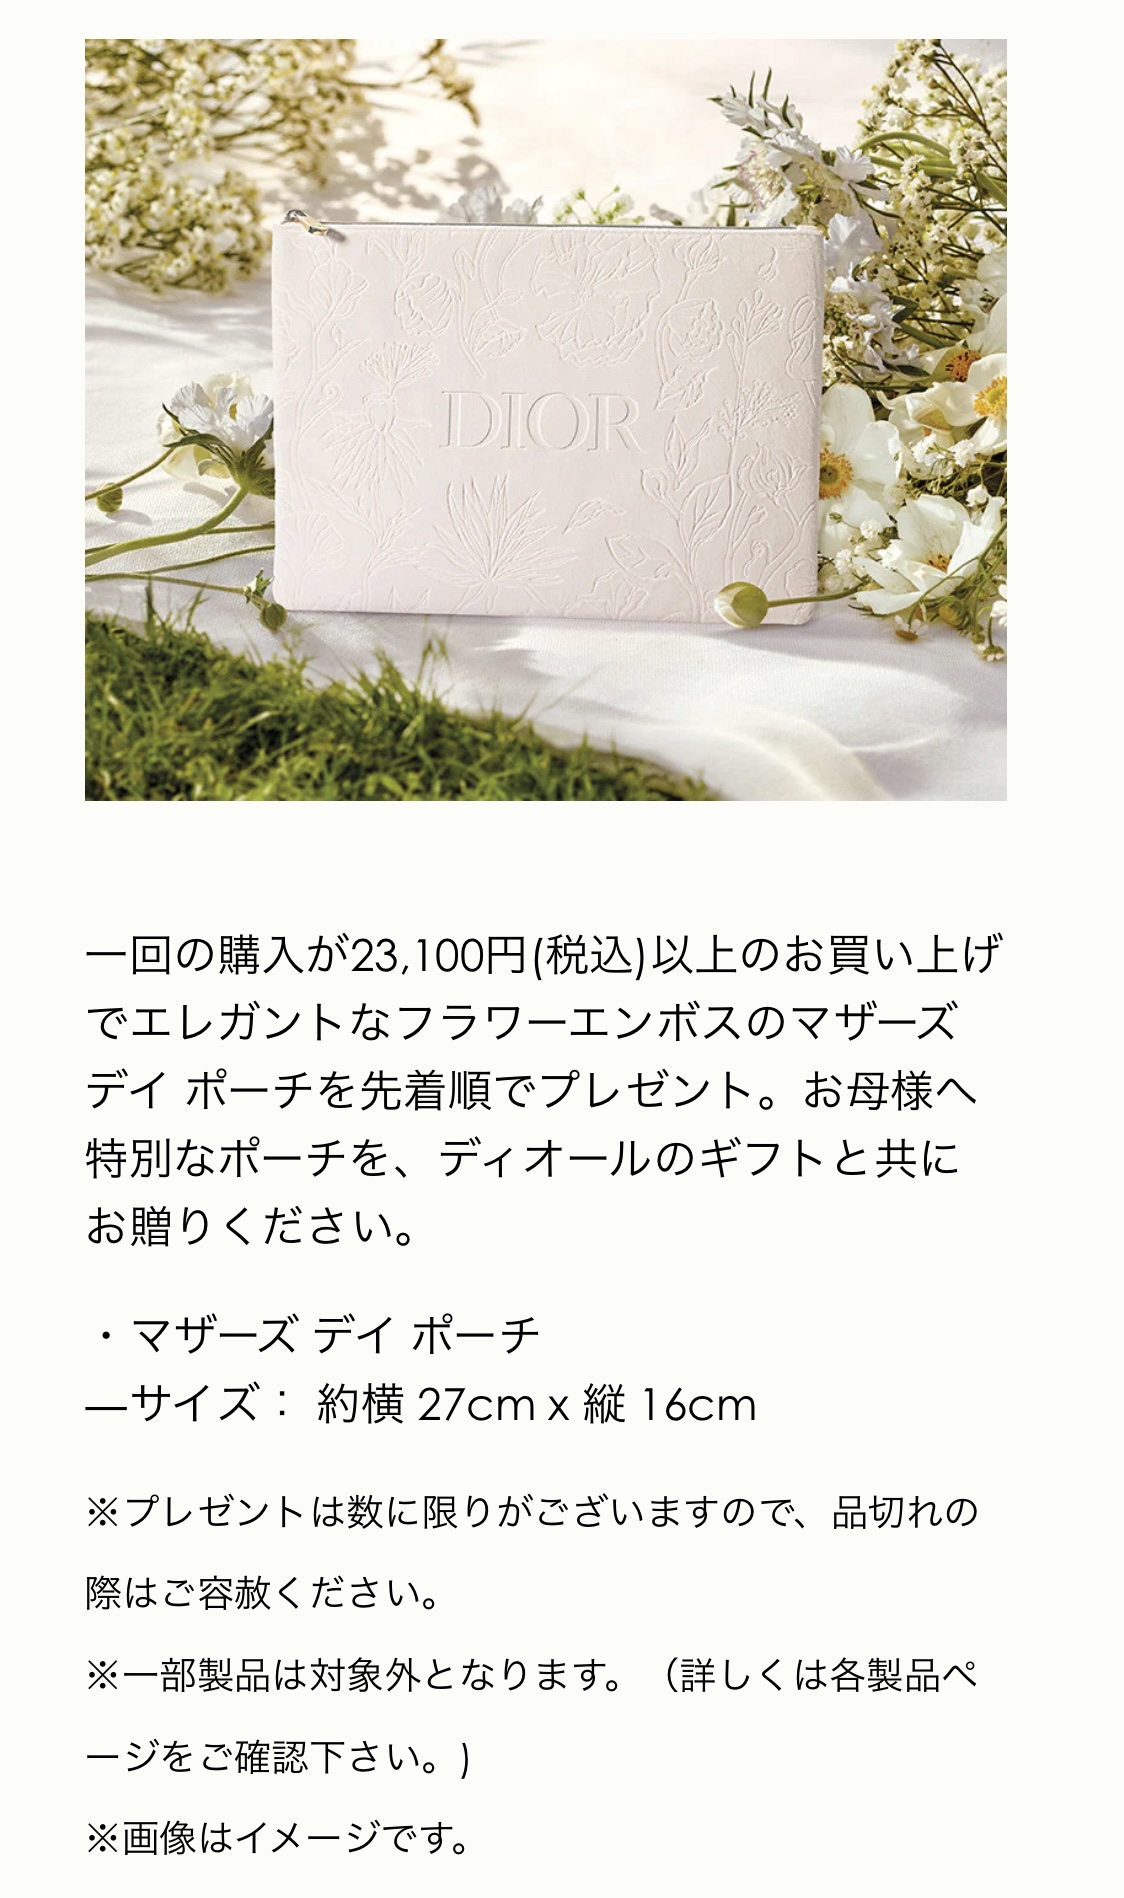 Dior4月の最新ノベルティ♡白いポーチが可愛すぎる！【ディオール 